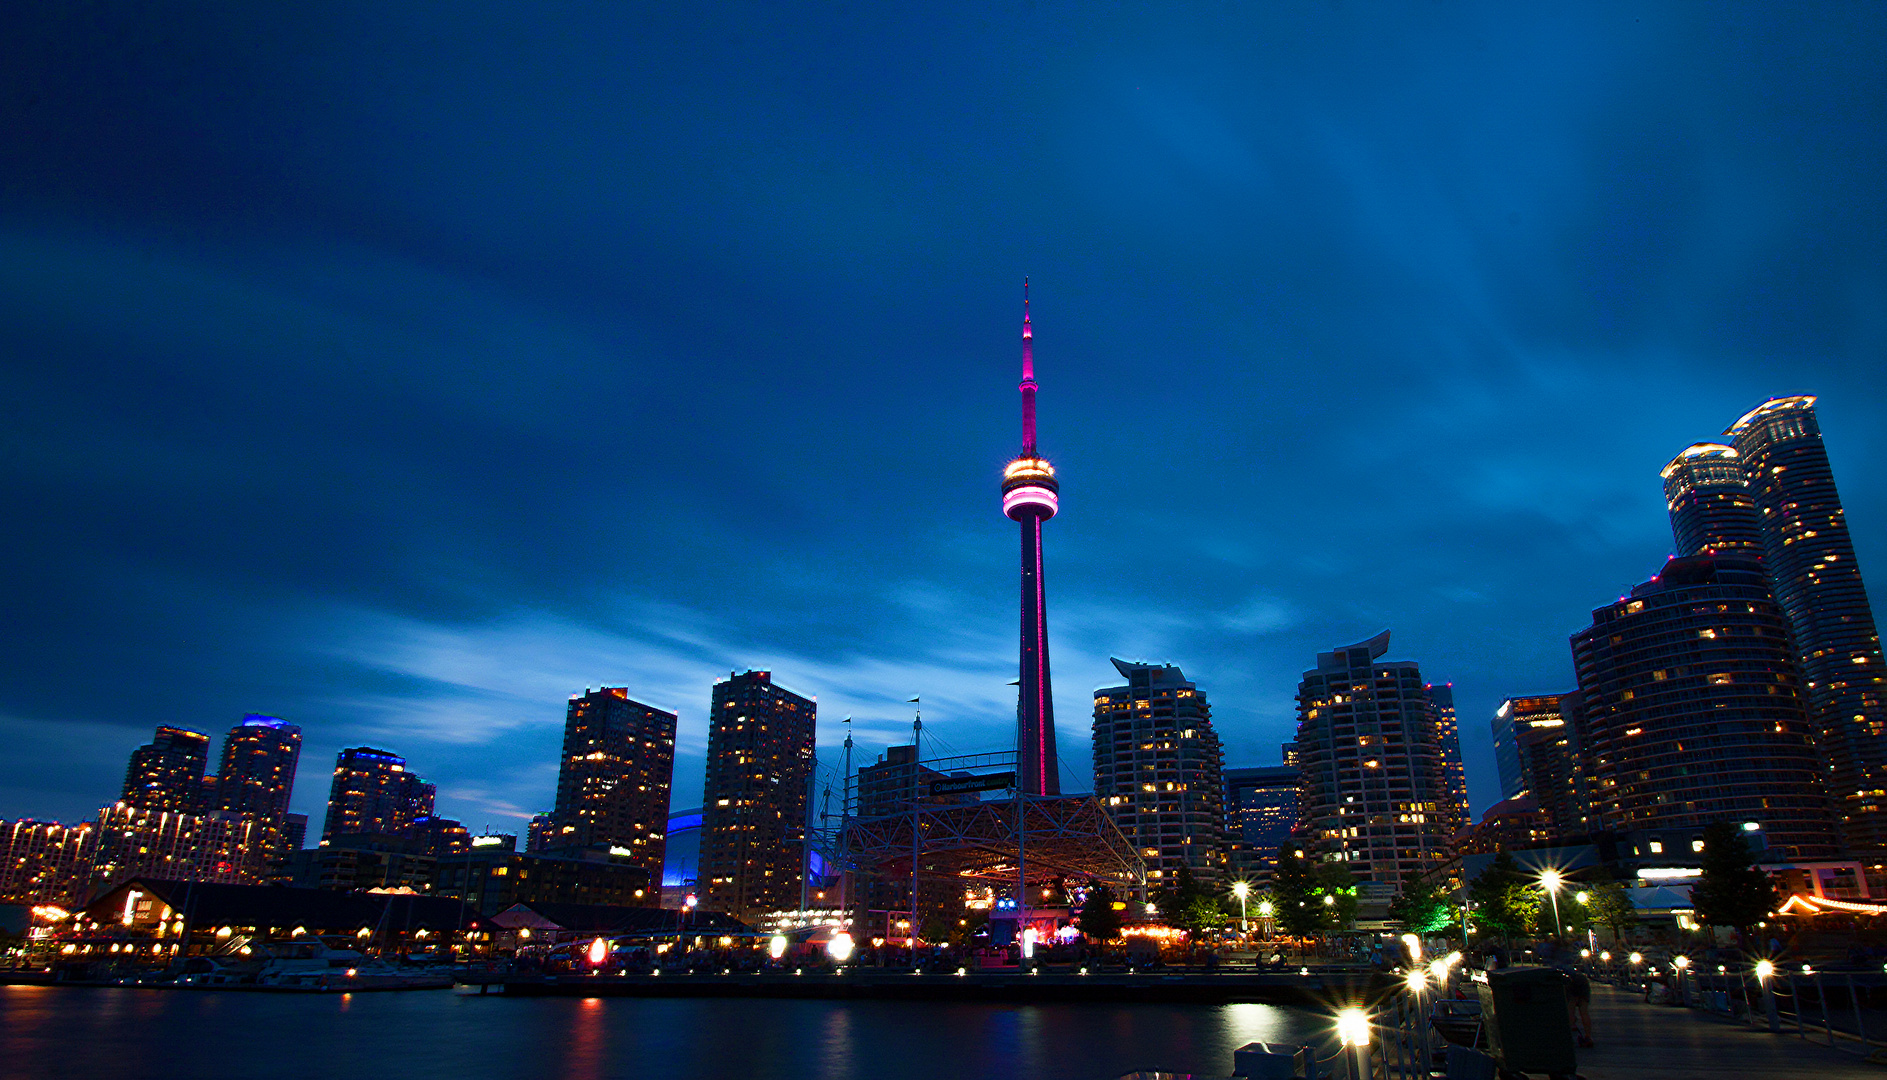 2016-Toronto-Blaue Stunde